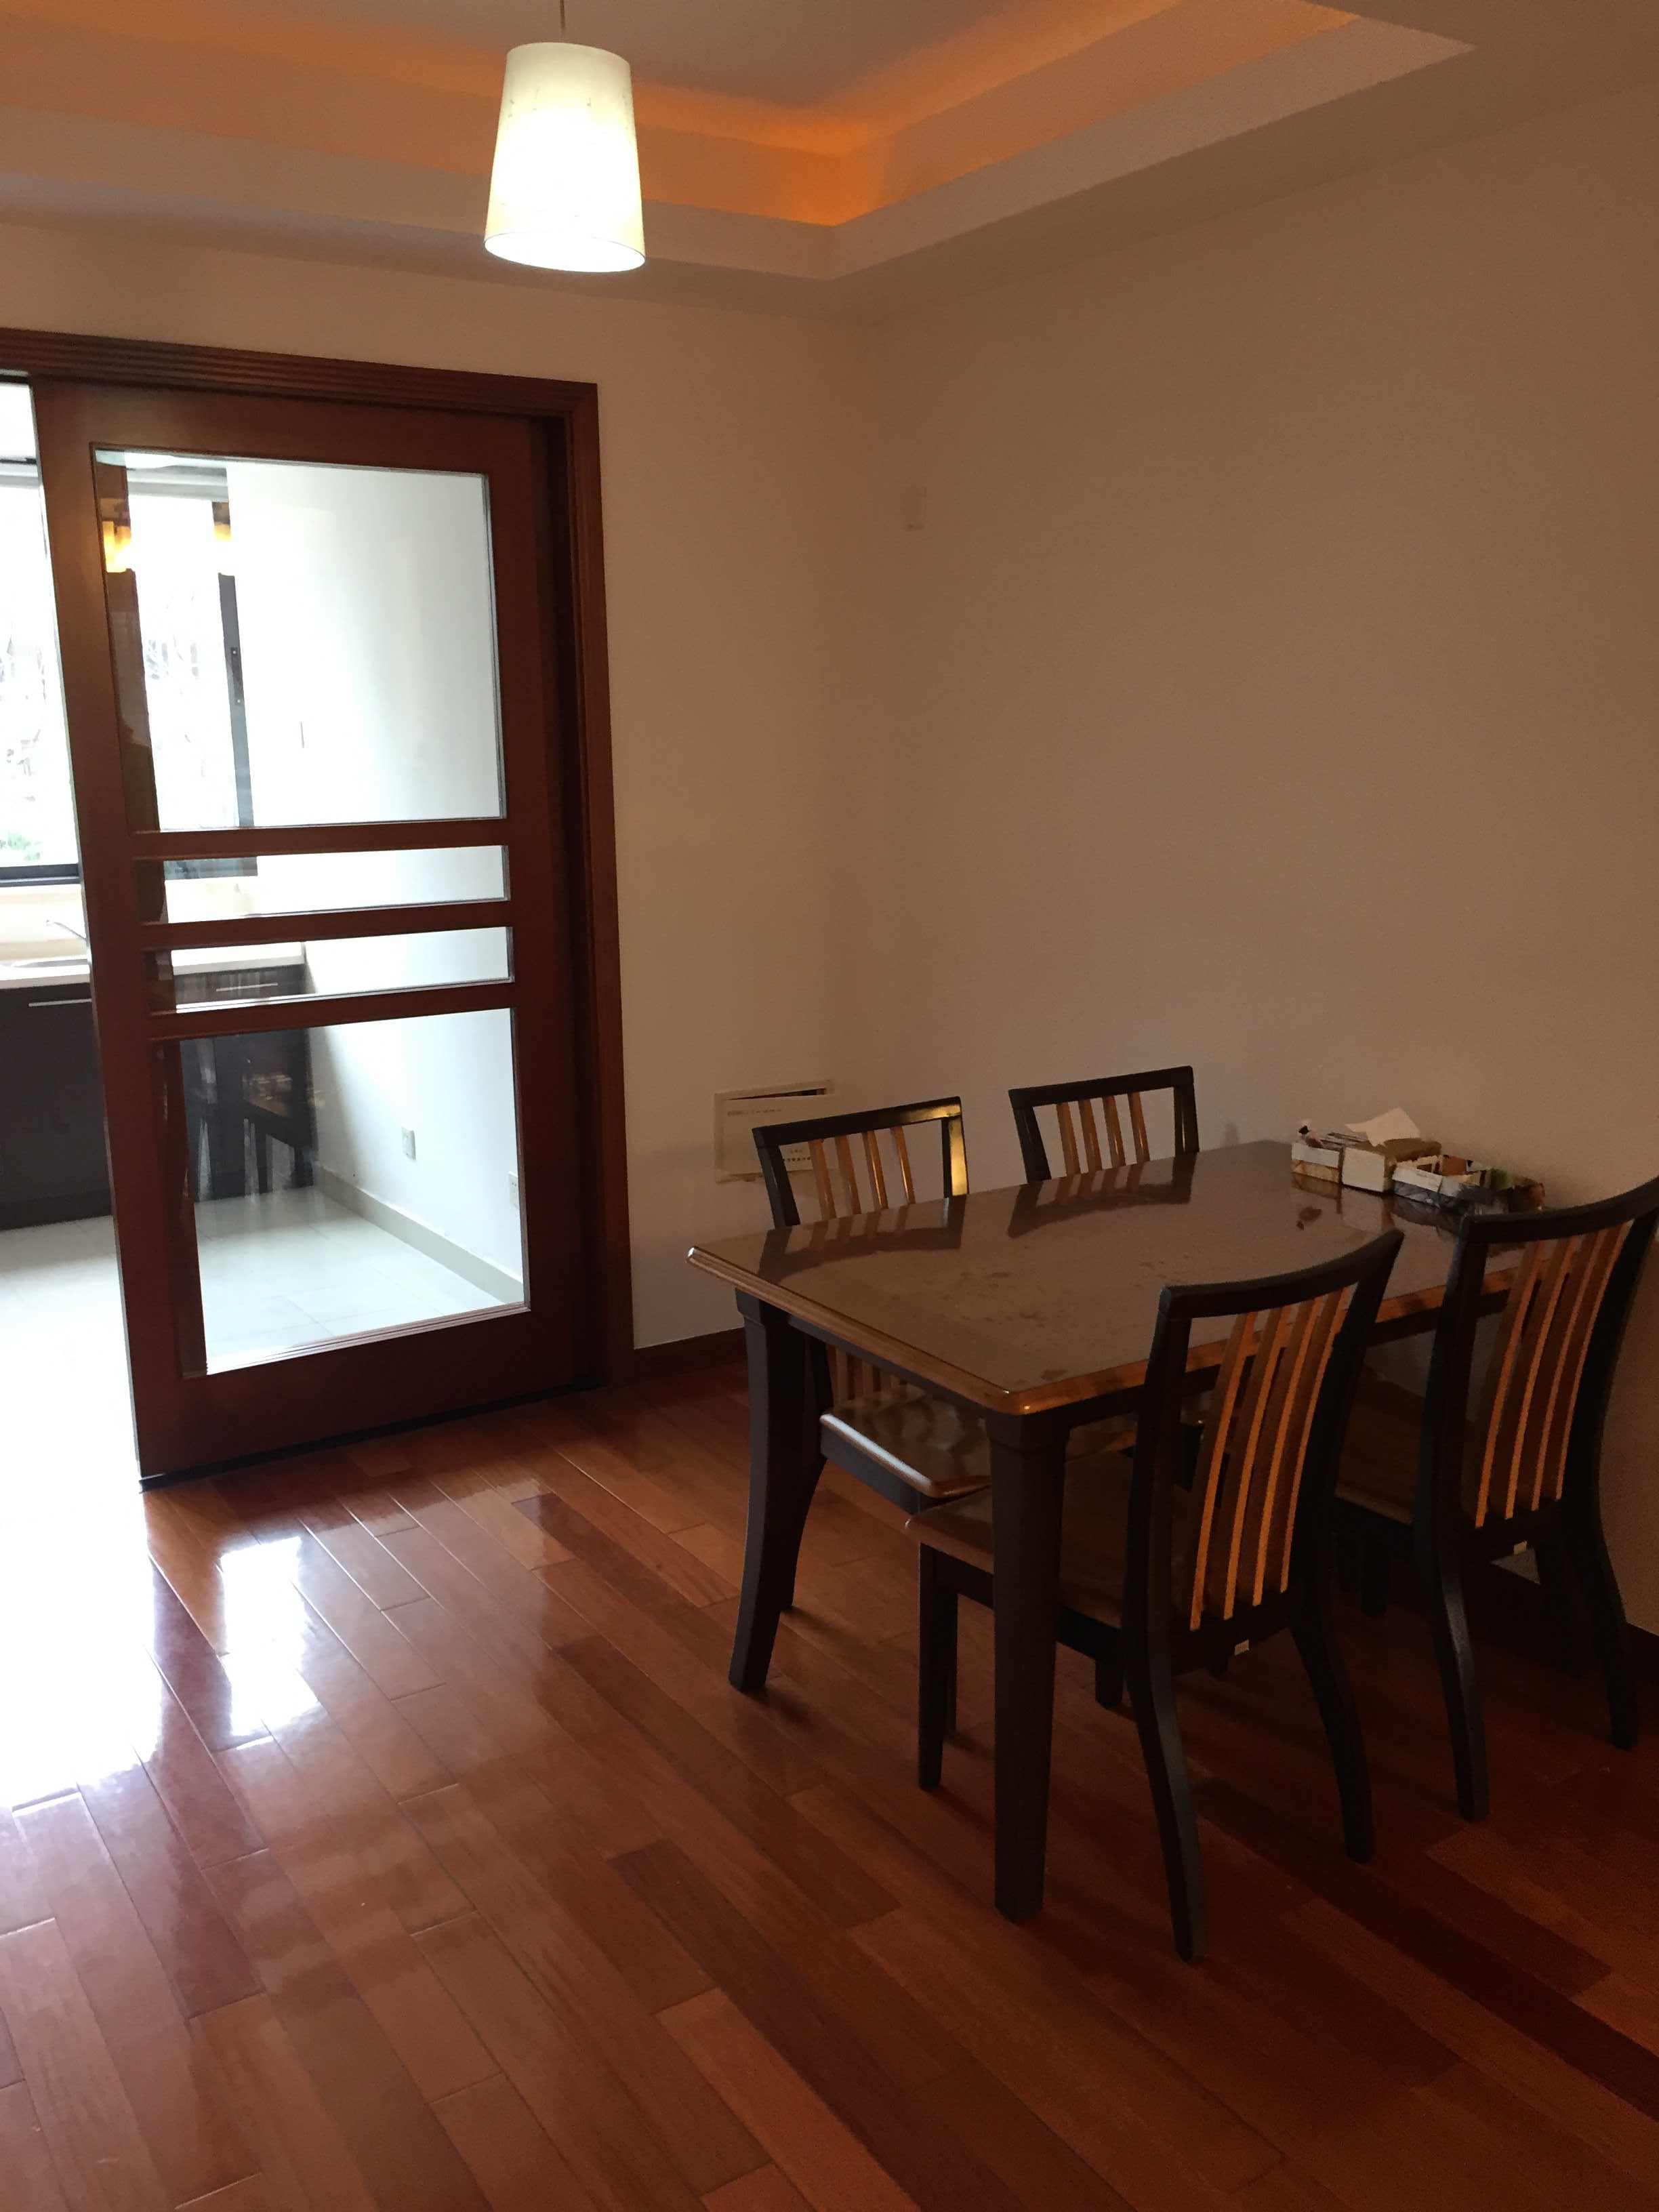 Nice Floors Good Price, Bright Spacious Apartment for Rent near Shanghai Zoo